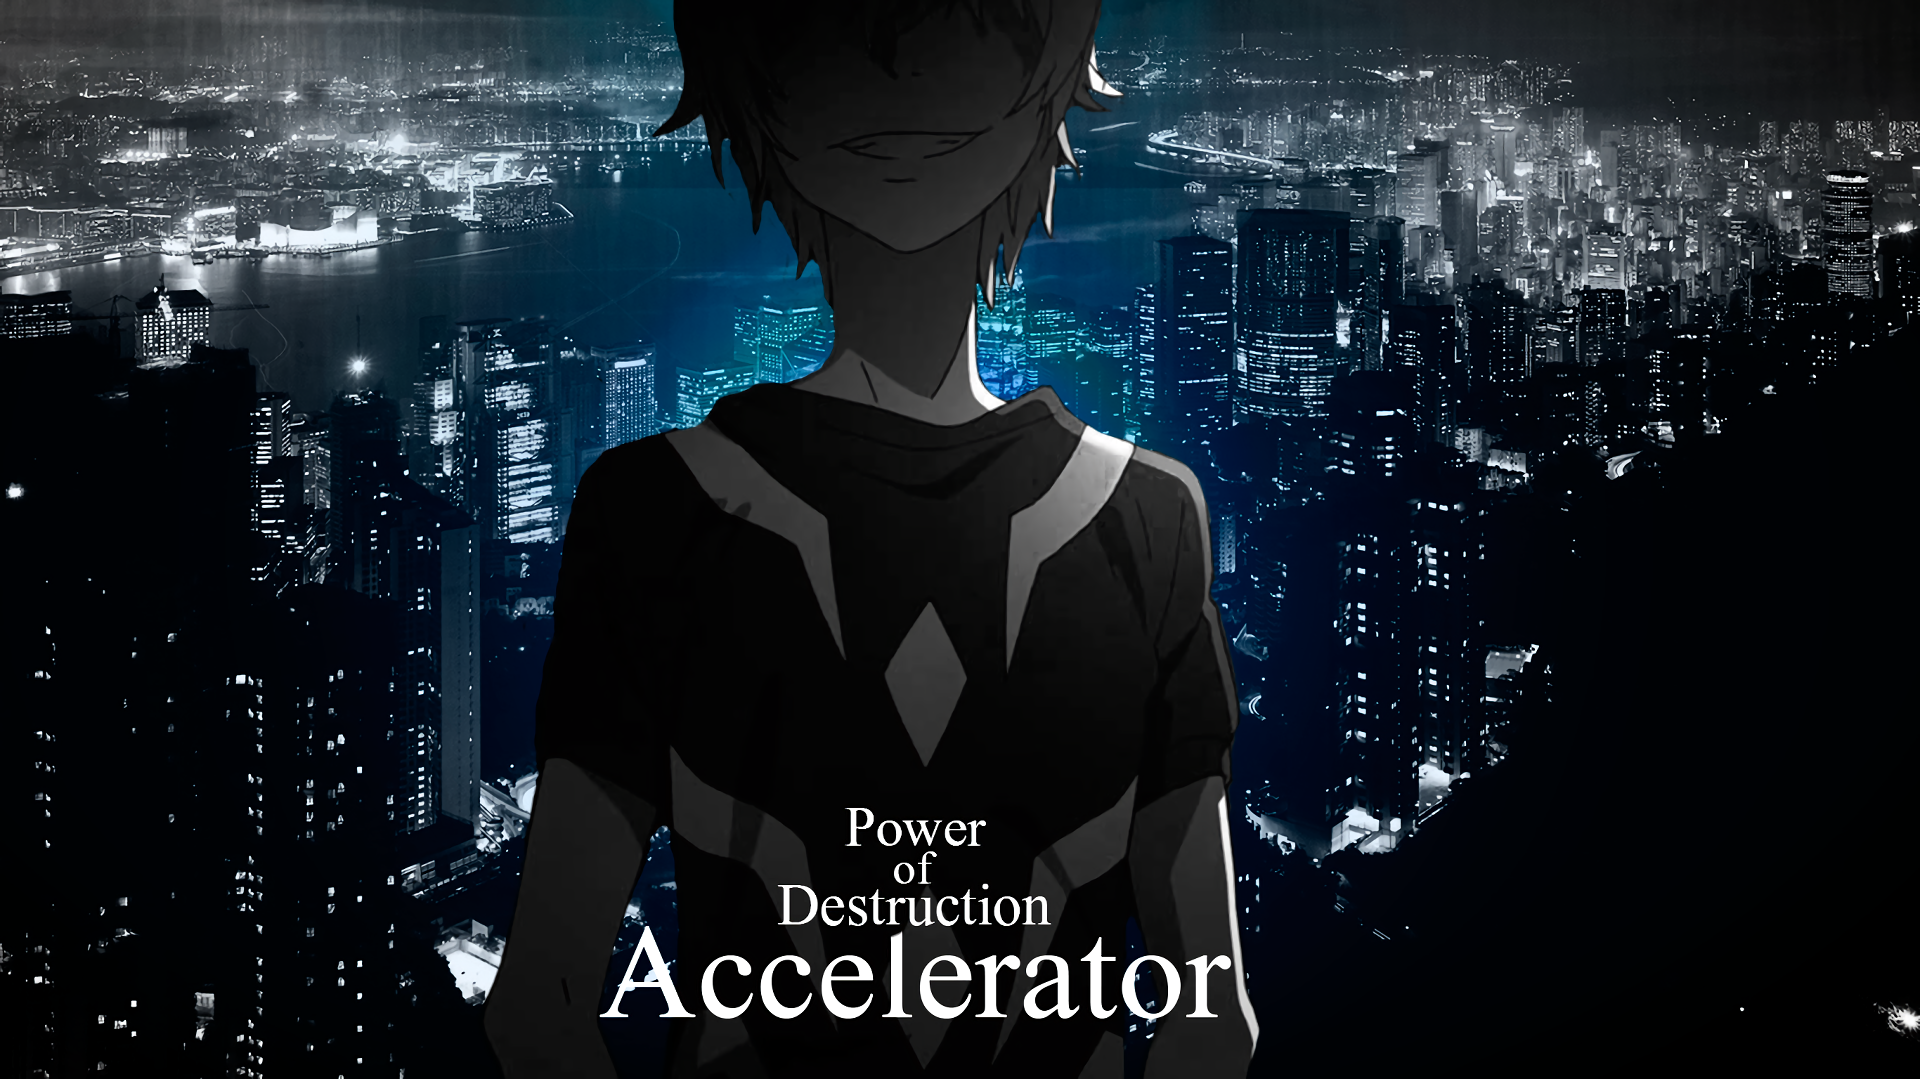 Toaru Kagaku no Accelerator (A Certain Scientific Accelerator